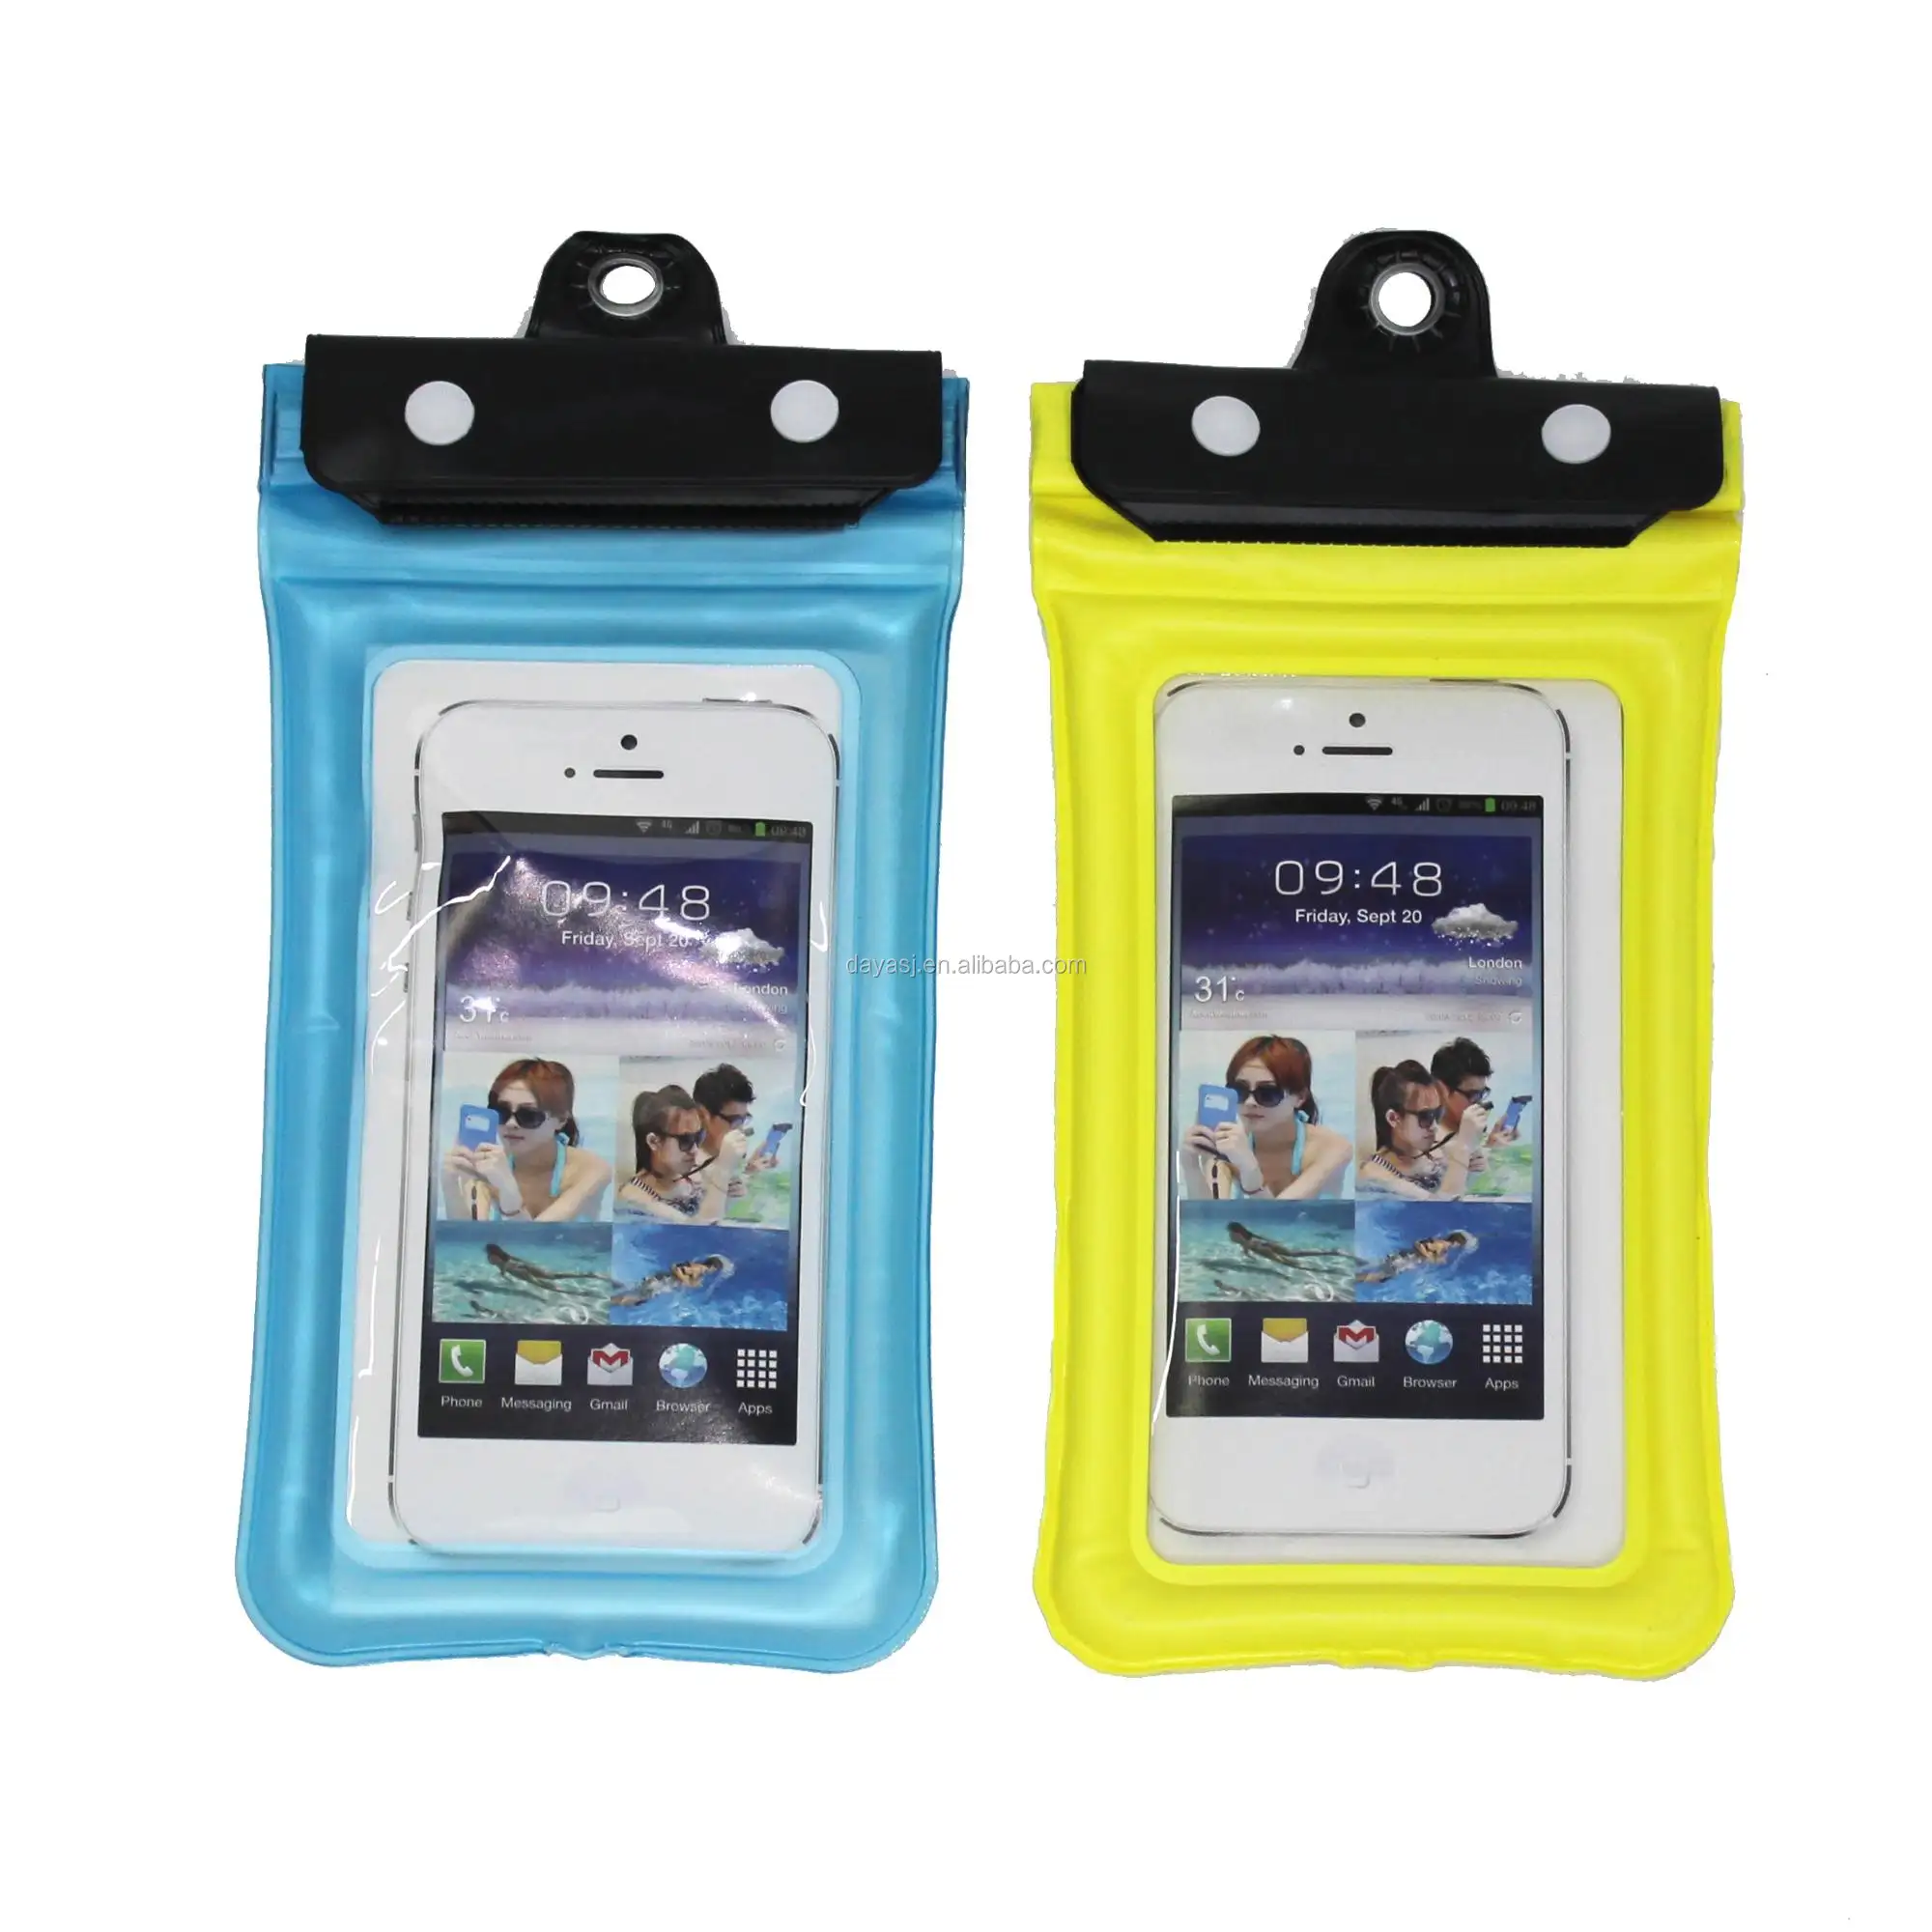 Waterproof Phone Bag New Item Mobile Phone Bags Cases Inflatable Waterproof Phone Bag